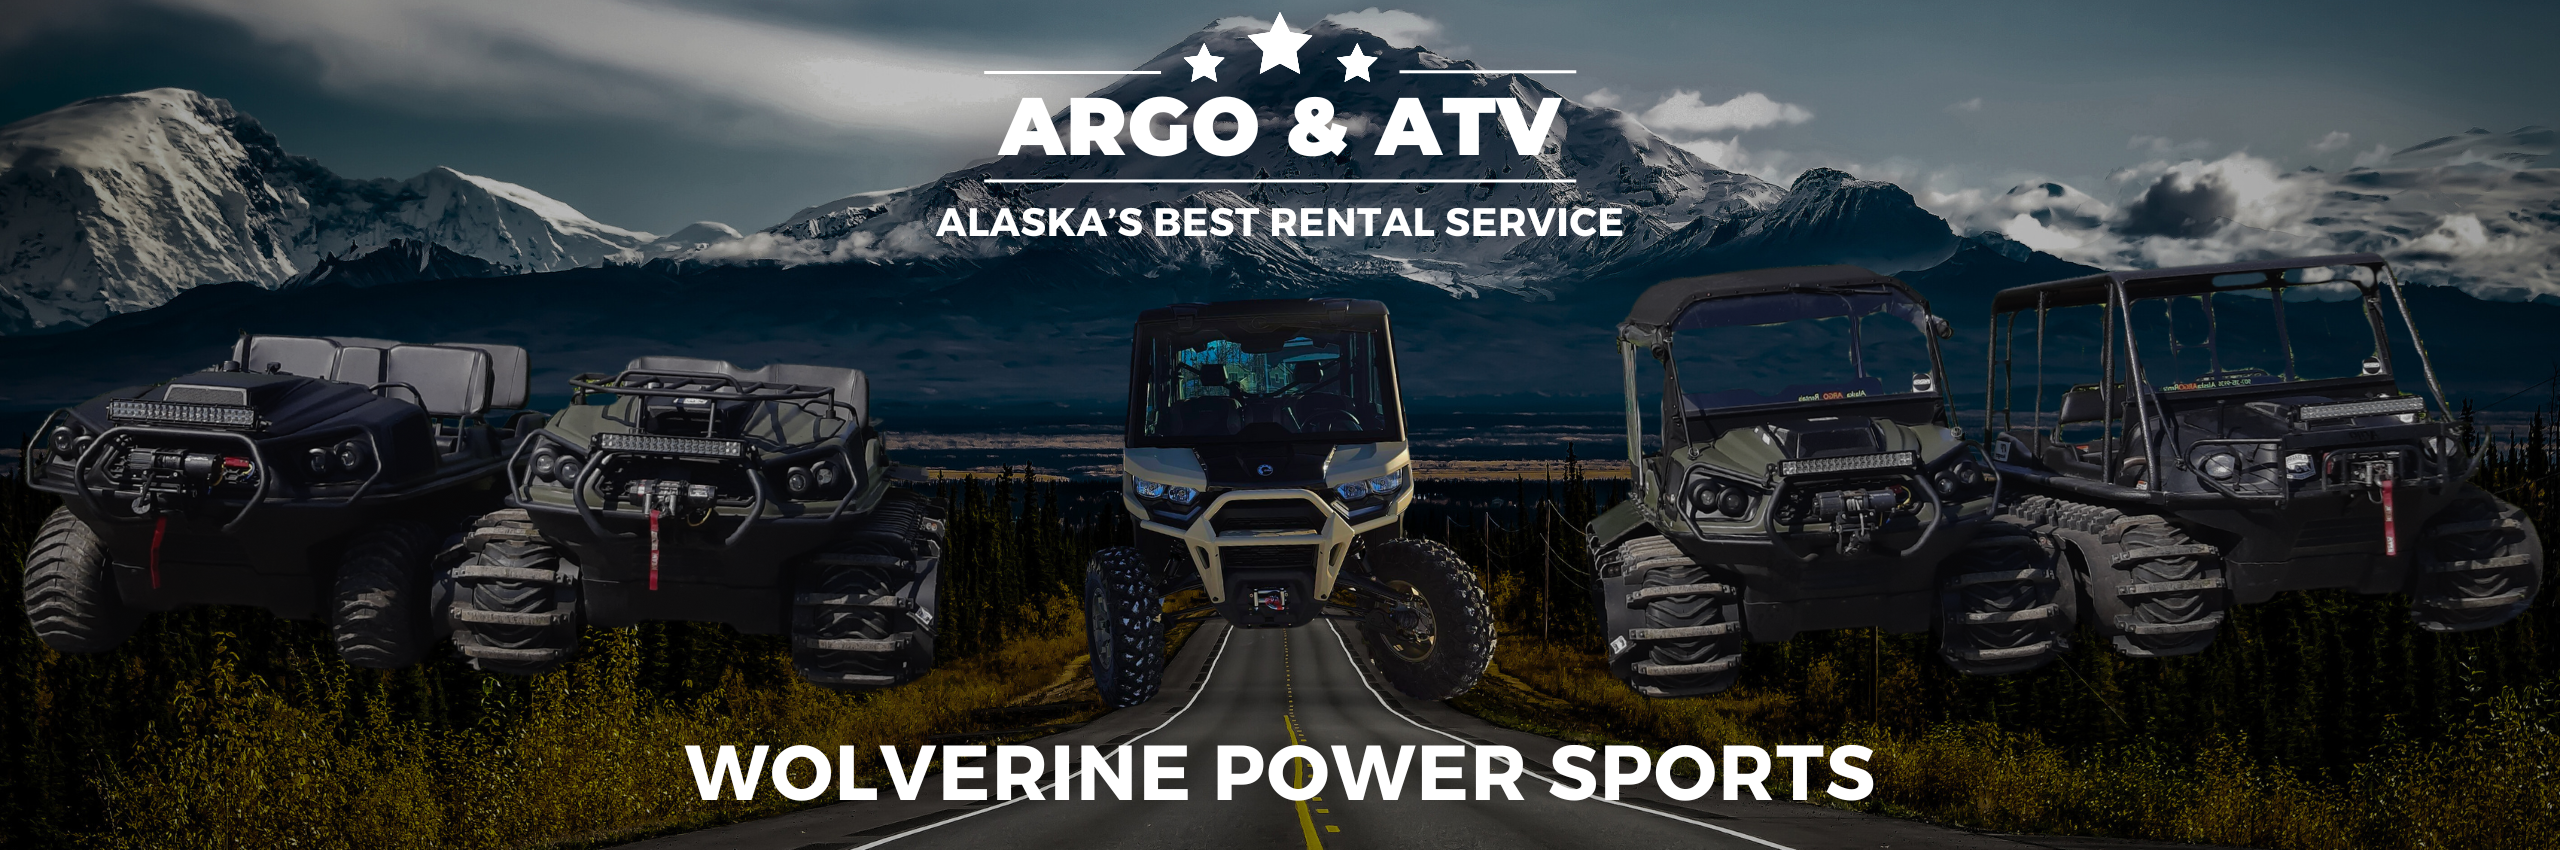 Alaska's Top ATV Rental Company